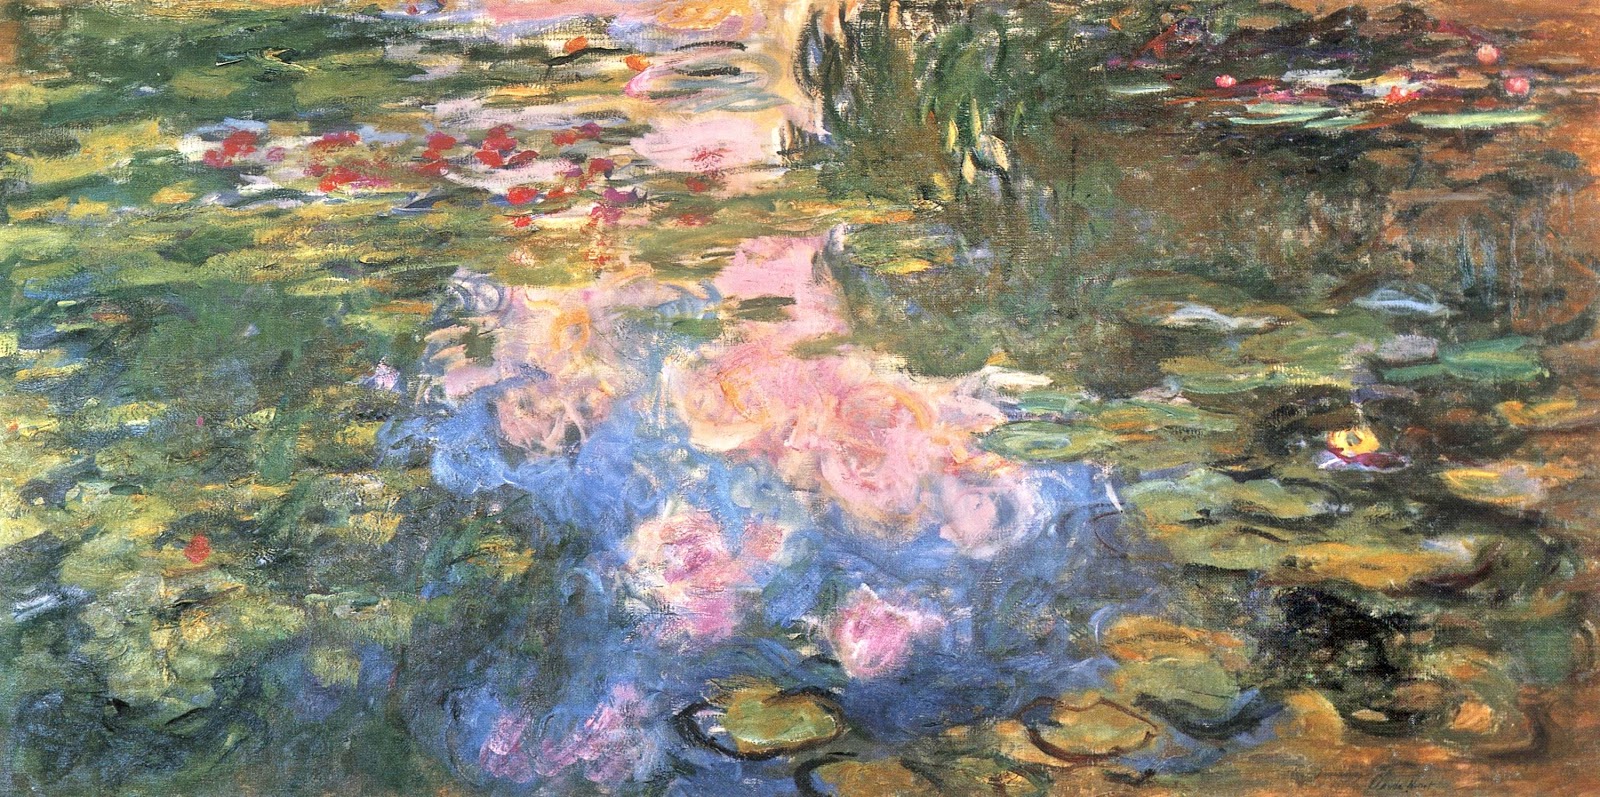 Claude+Monet-1840-1926 (416).jpg